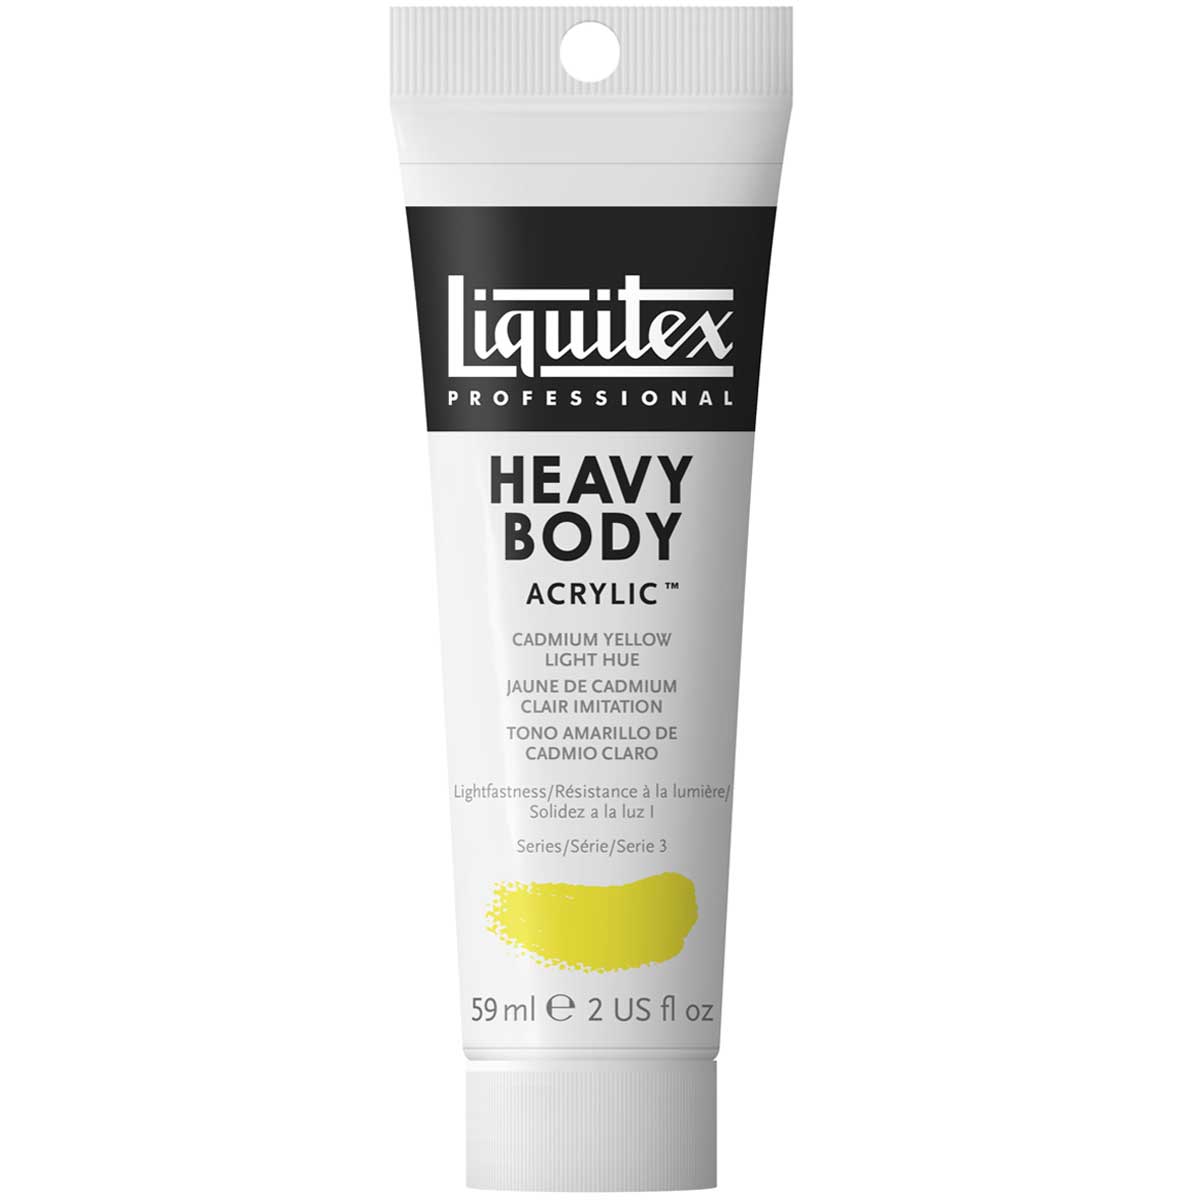 Liquitex Heavy Body Acrylic - Cadmium Yellow Light Hue 59ml/2oz